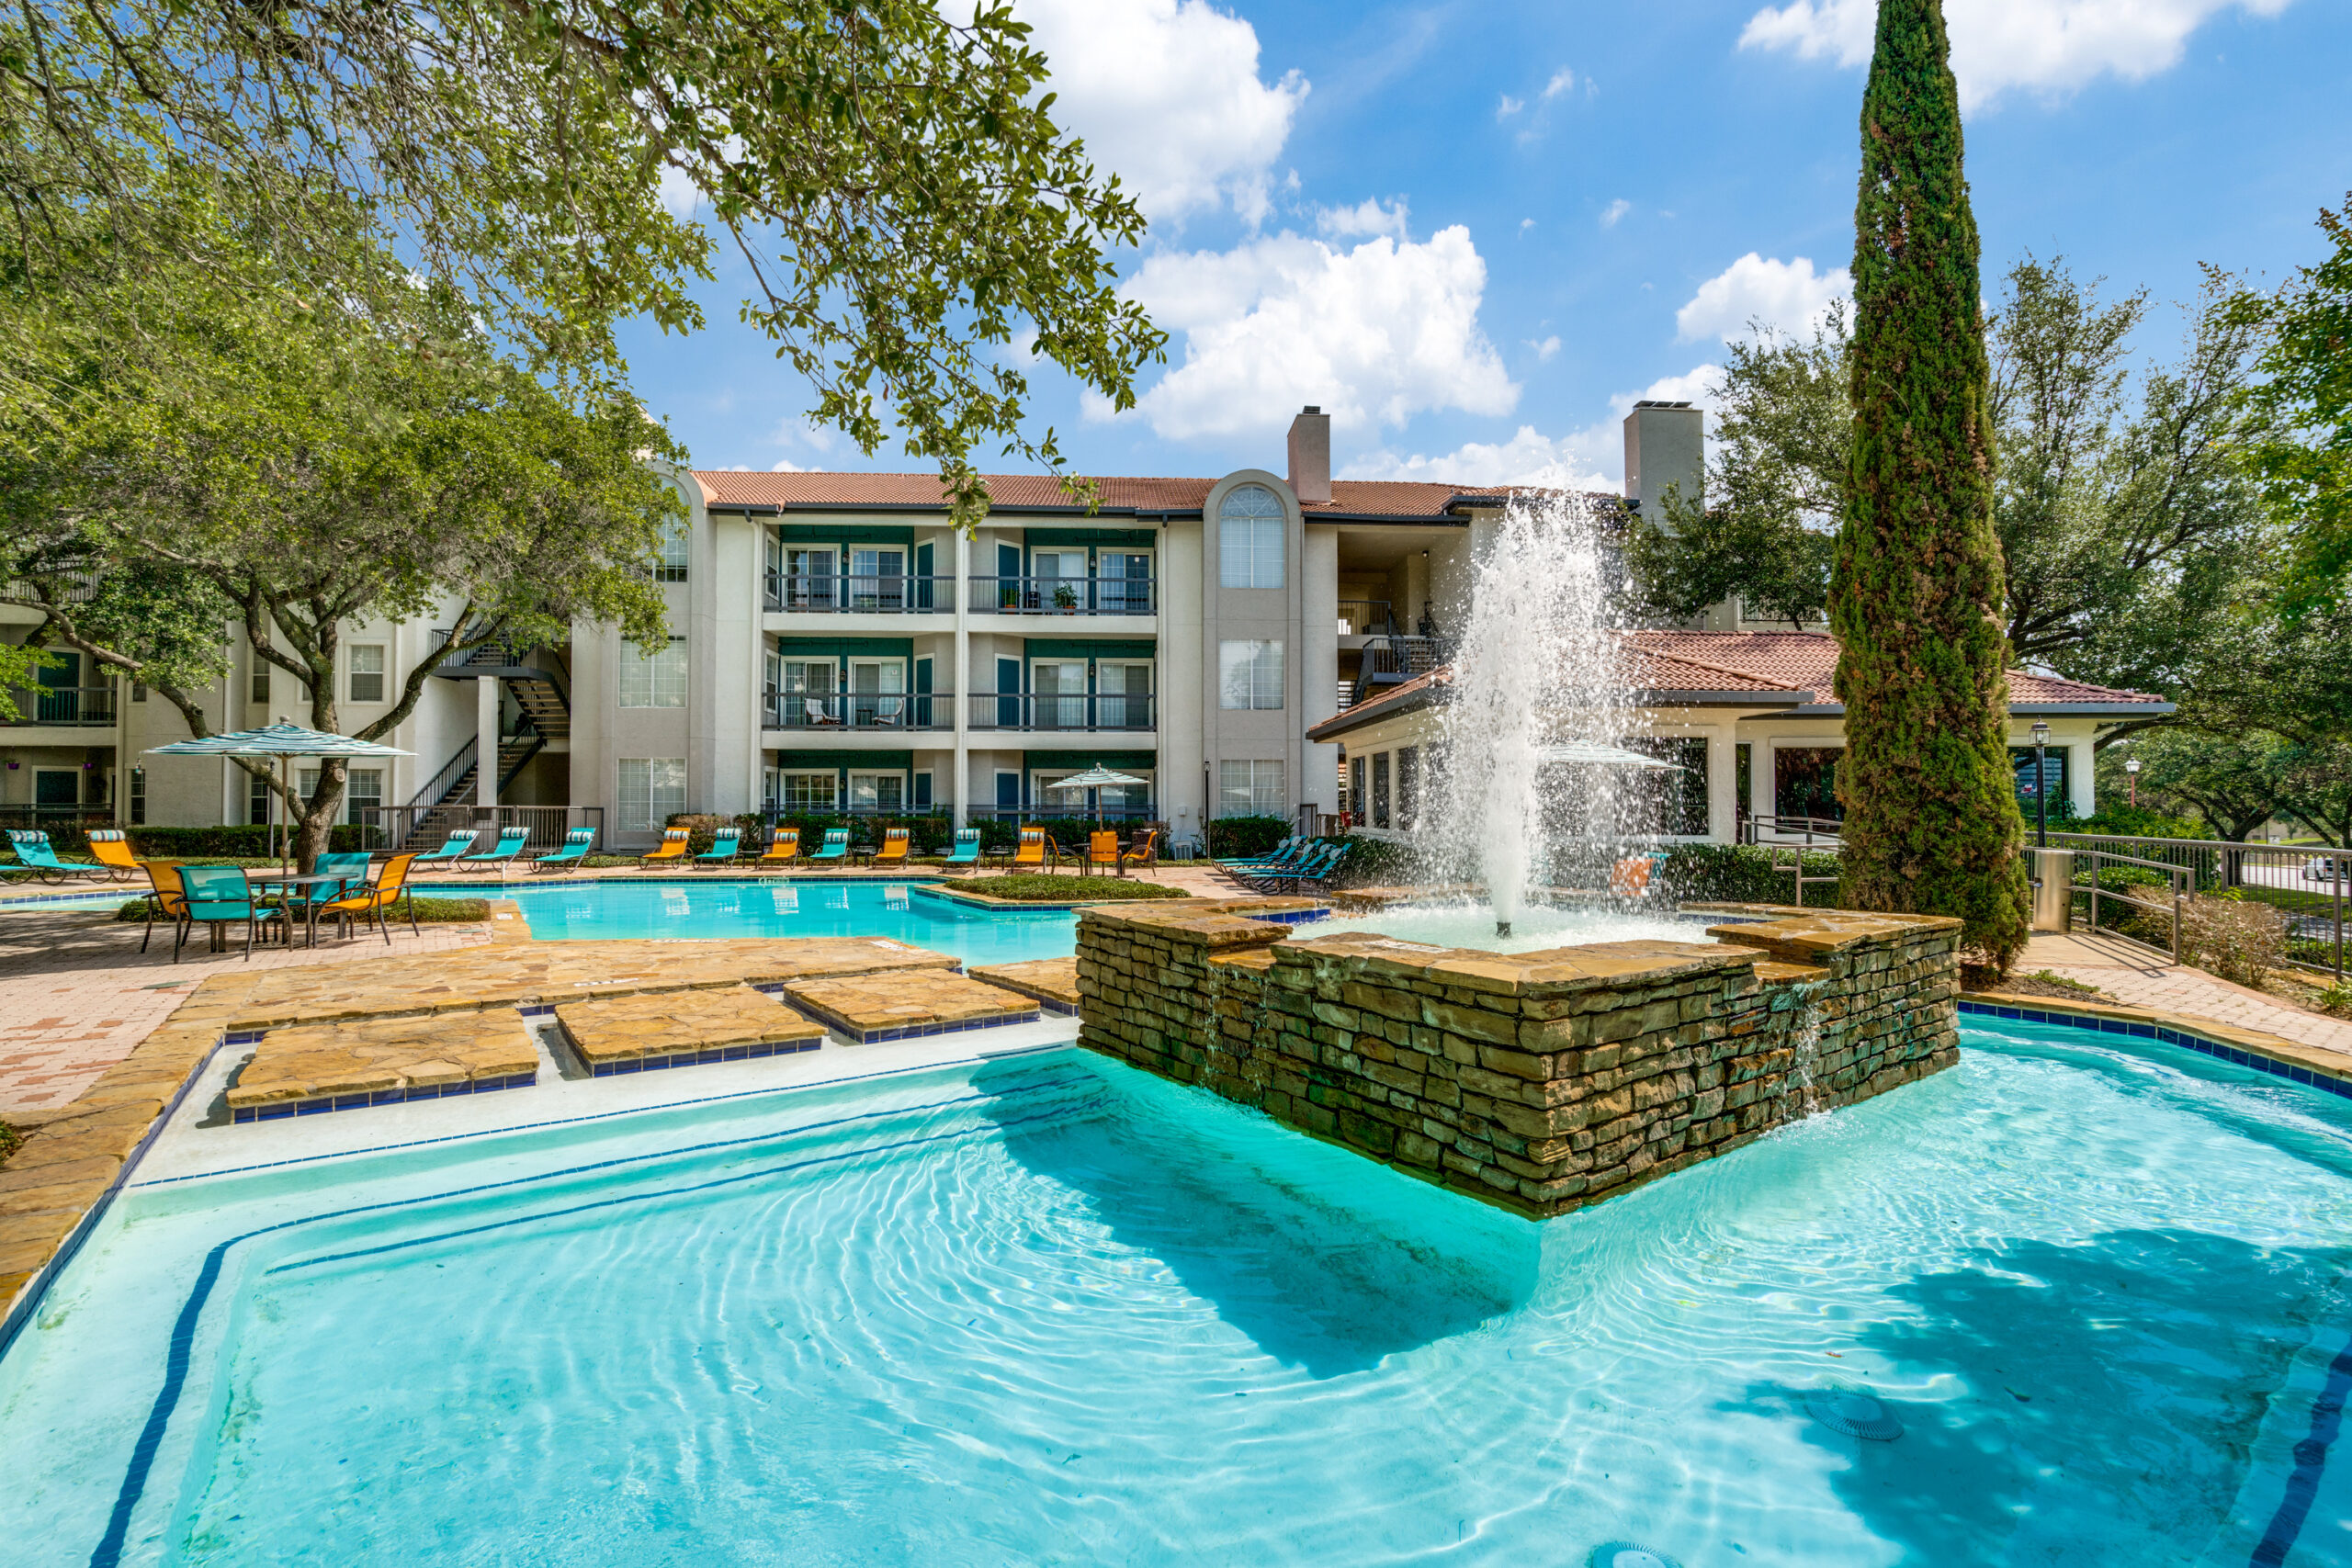 Luxury resort-style pool